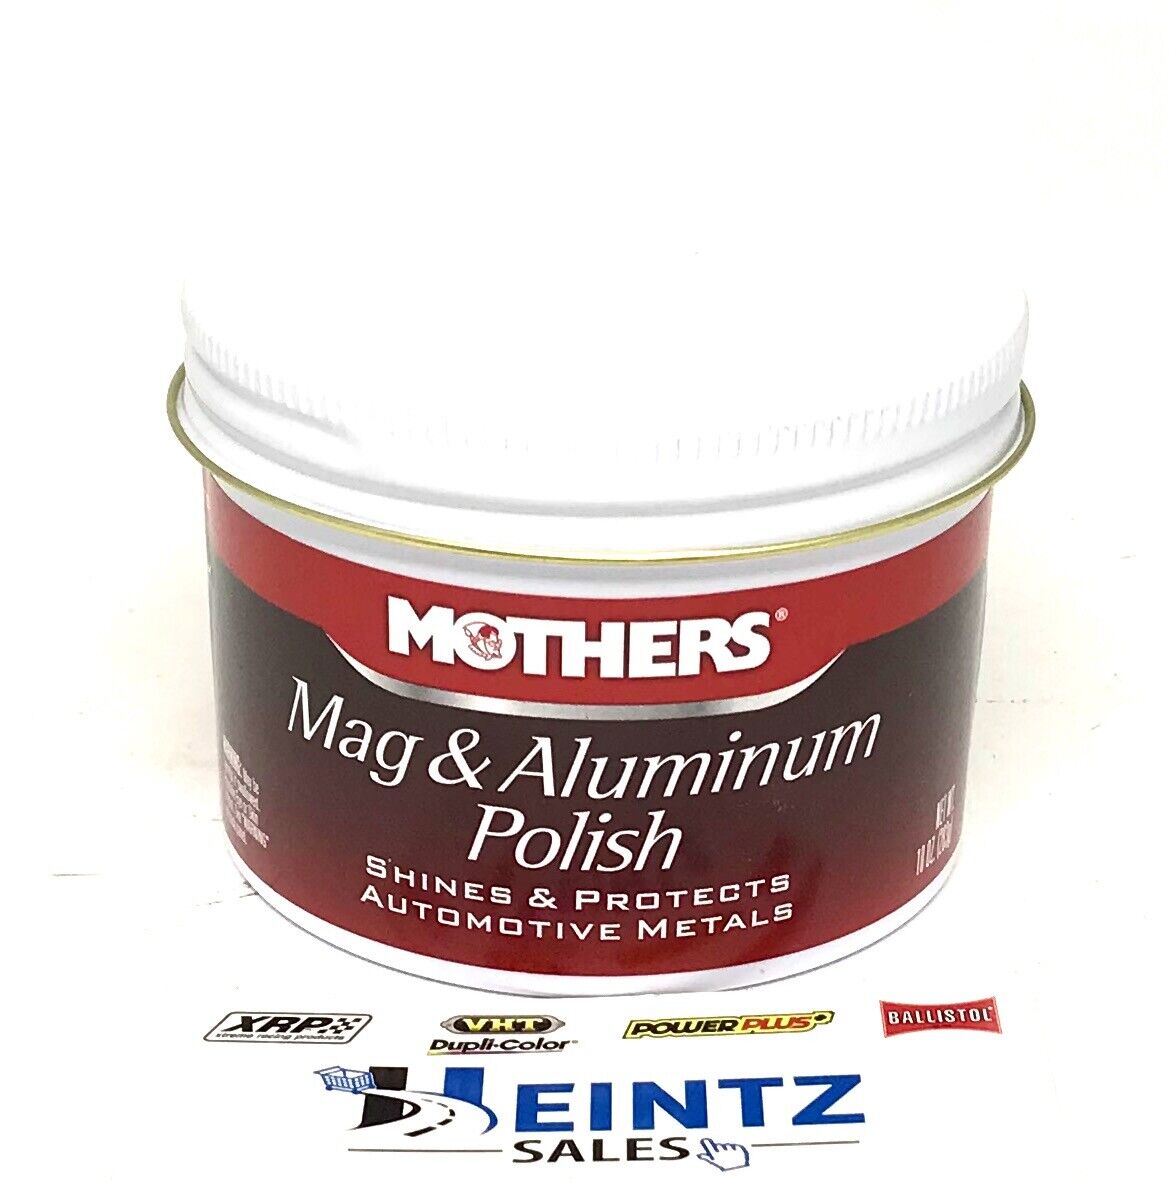 Mothers mag and aluminum polish works wonders on oxidized